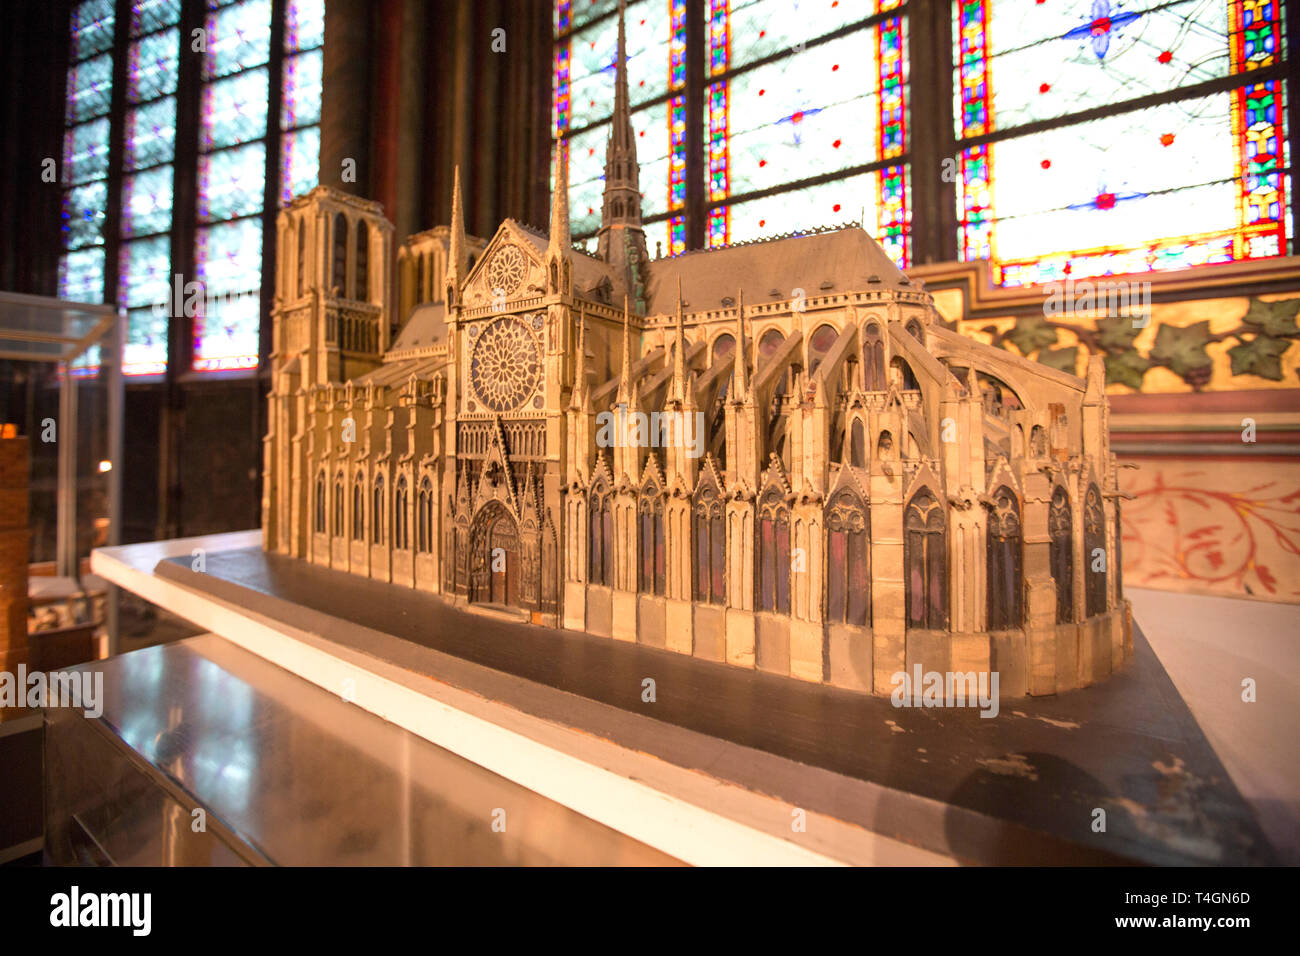 Modelle der Notre Dame Kathedrale. Maquette, bevor 2019 das Feuer. Frankreich Stockfoto